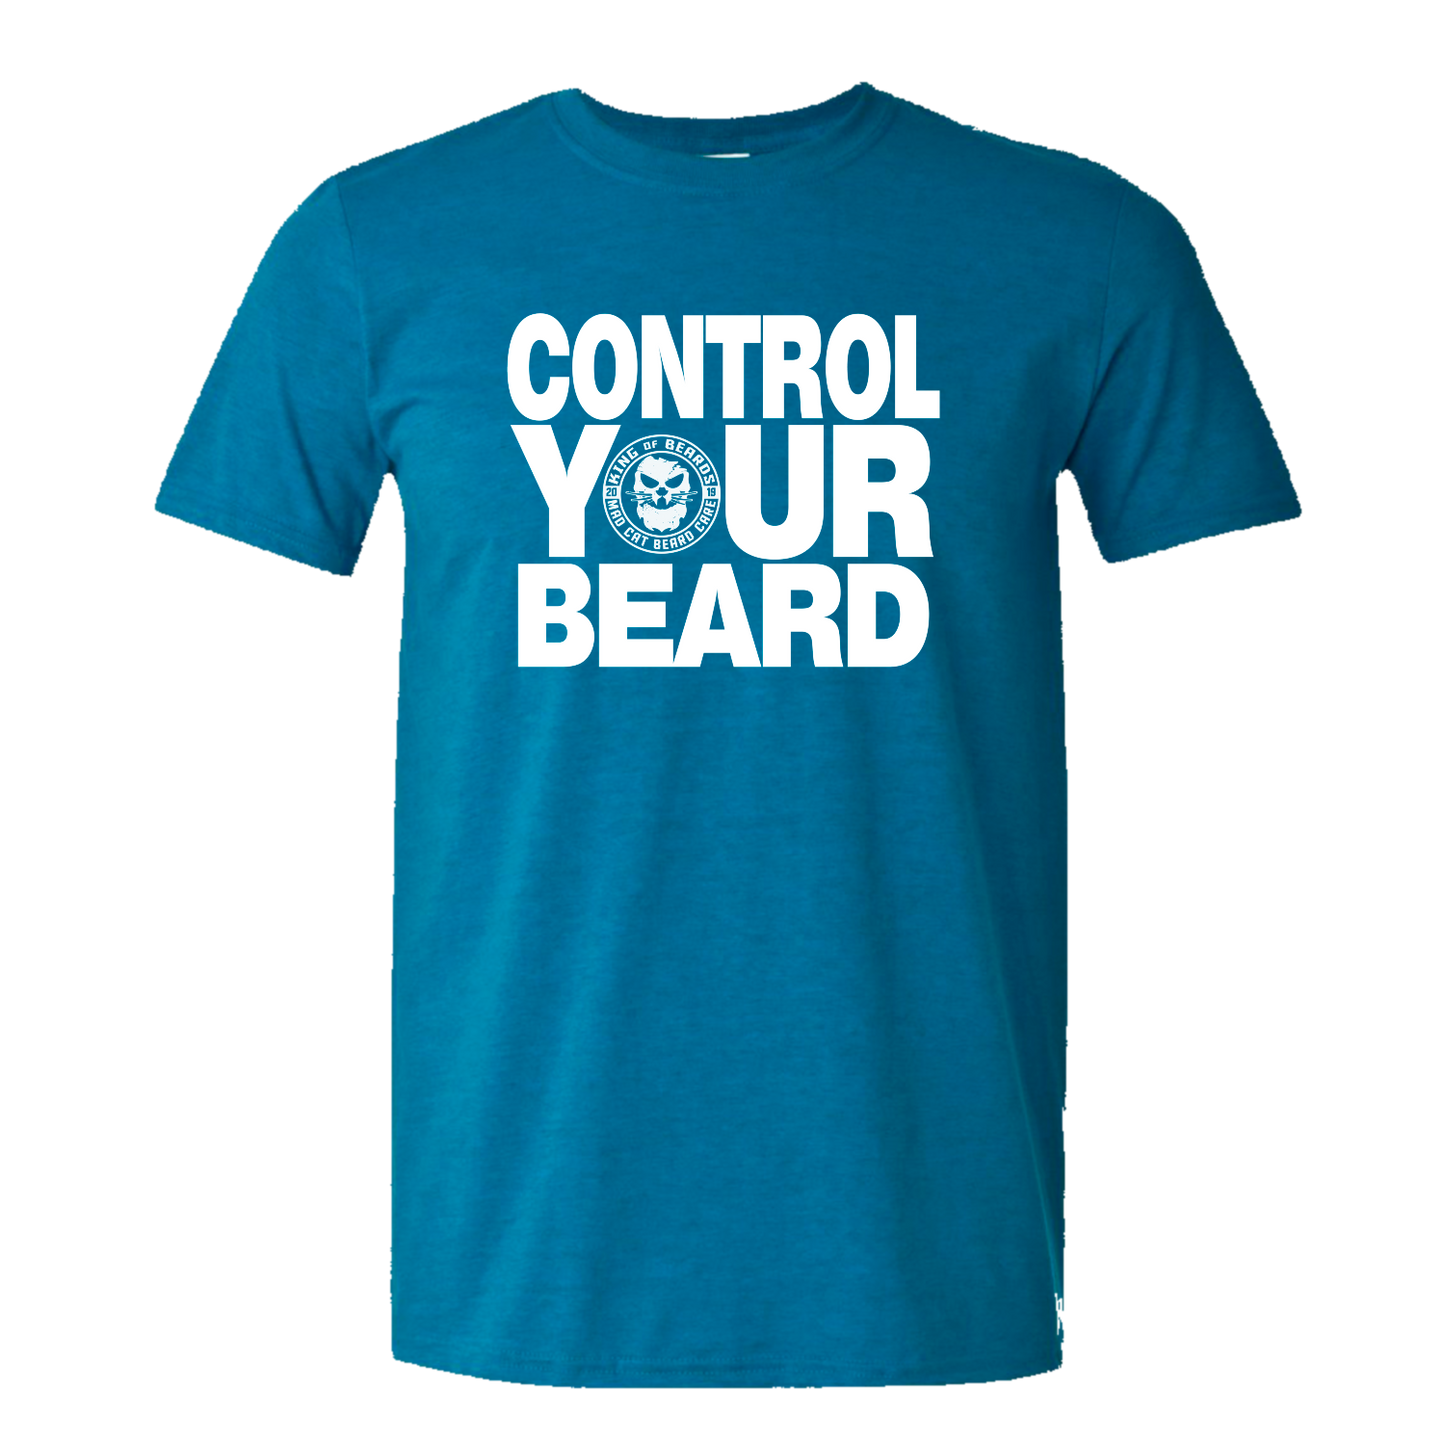 Control Your Beard (T-Shirt)